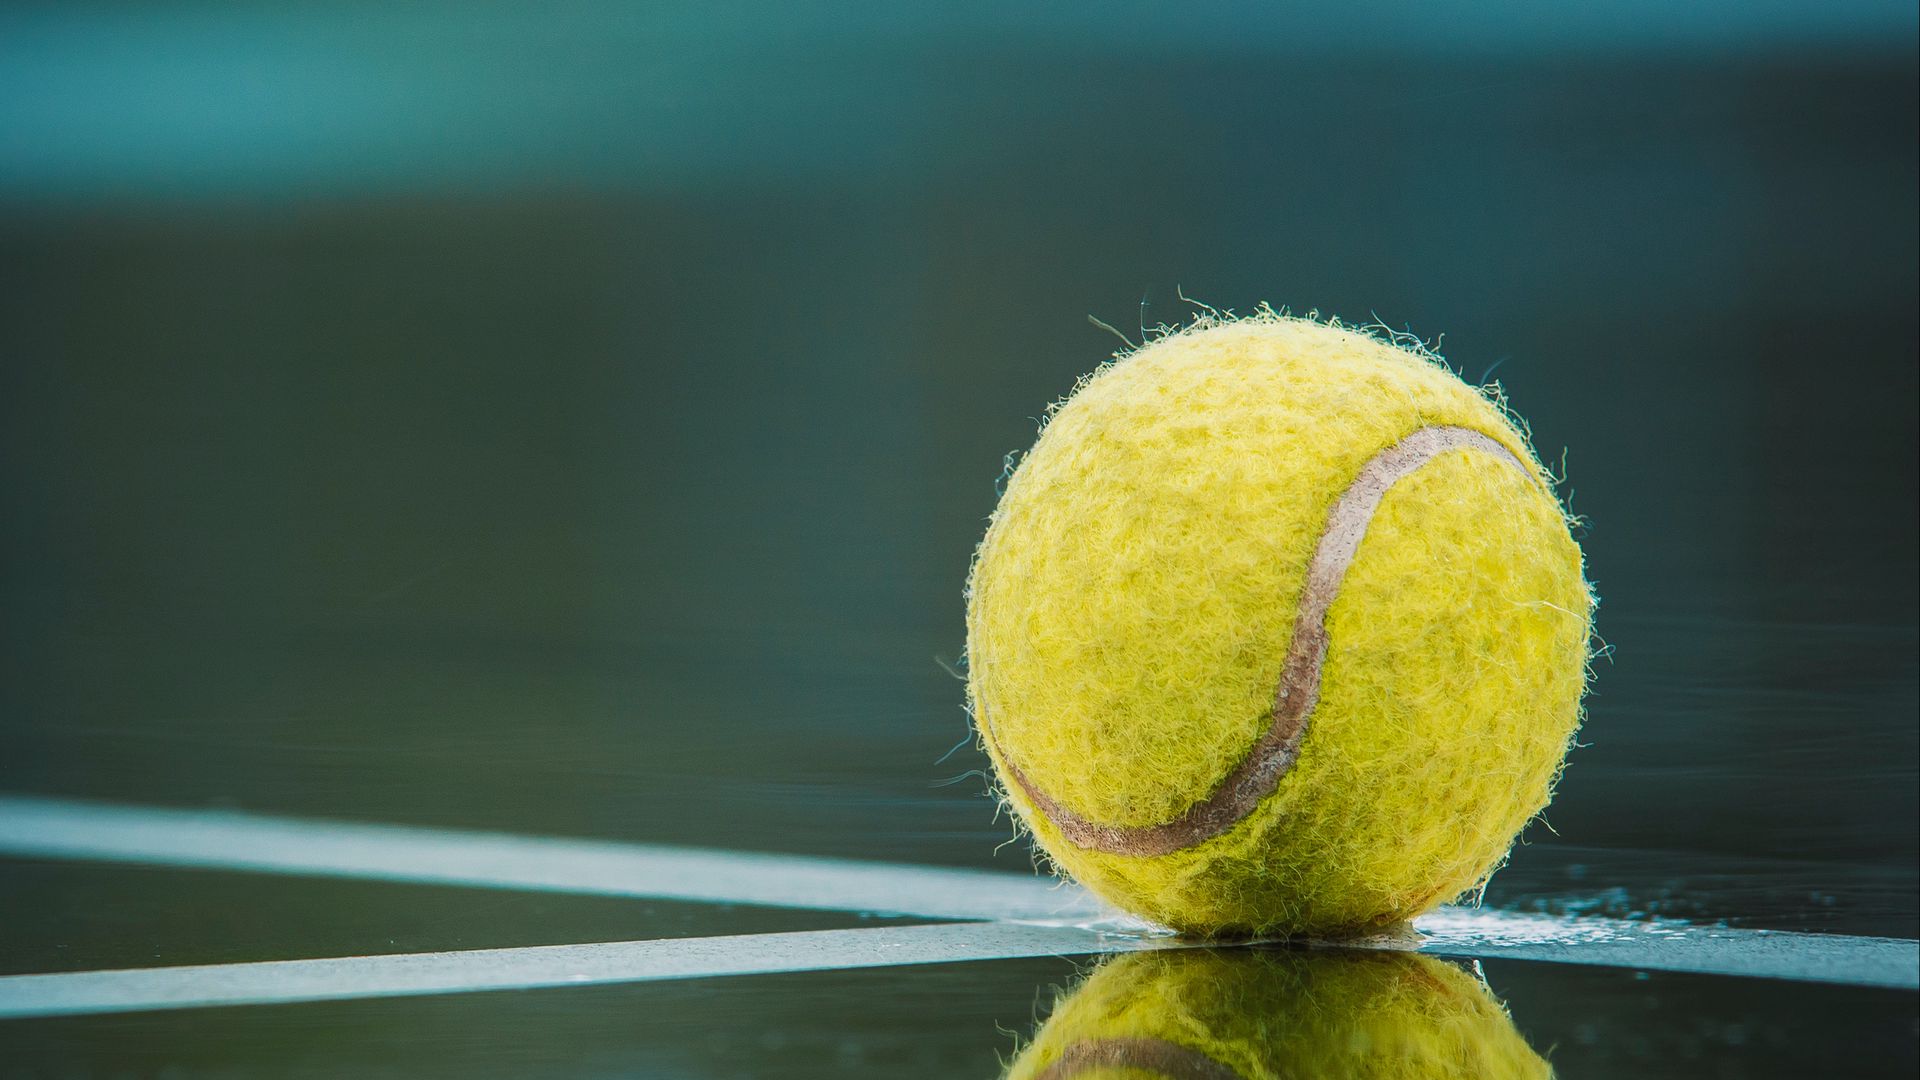 Теннисный мяч Wimbledon. Теннисный мяч Torneo. Метание теннисного мяча. Текстура теннисного мяча.